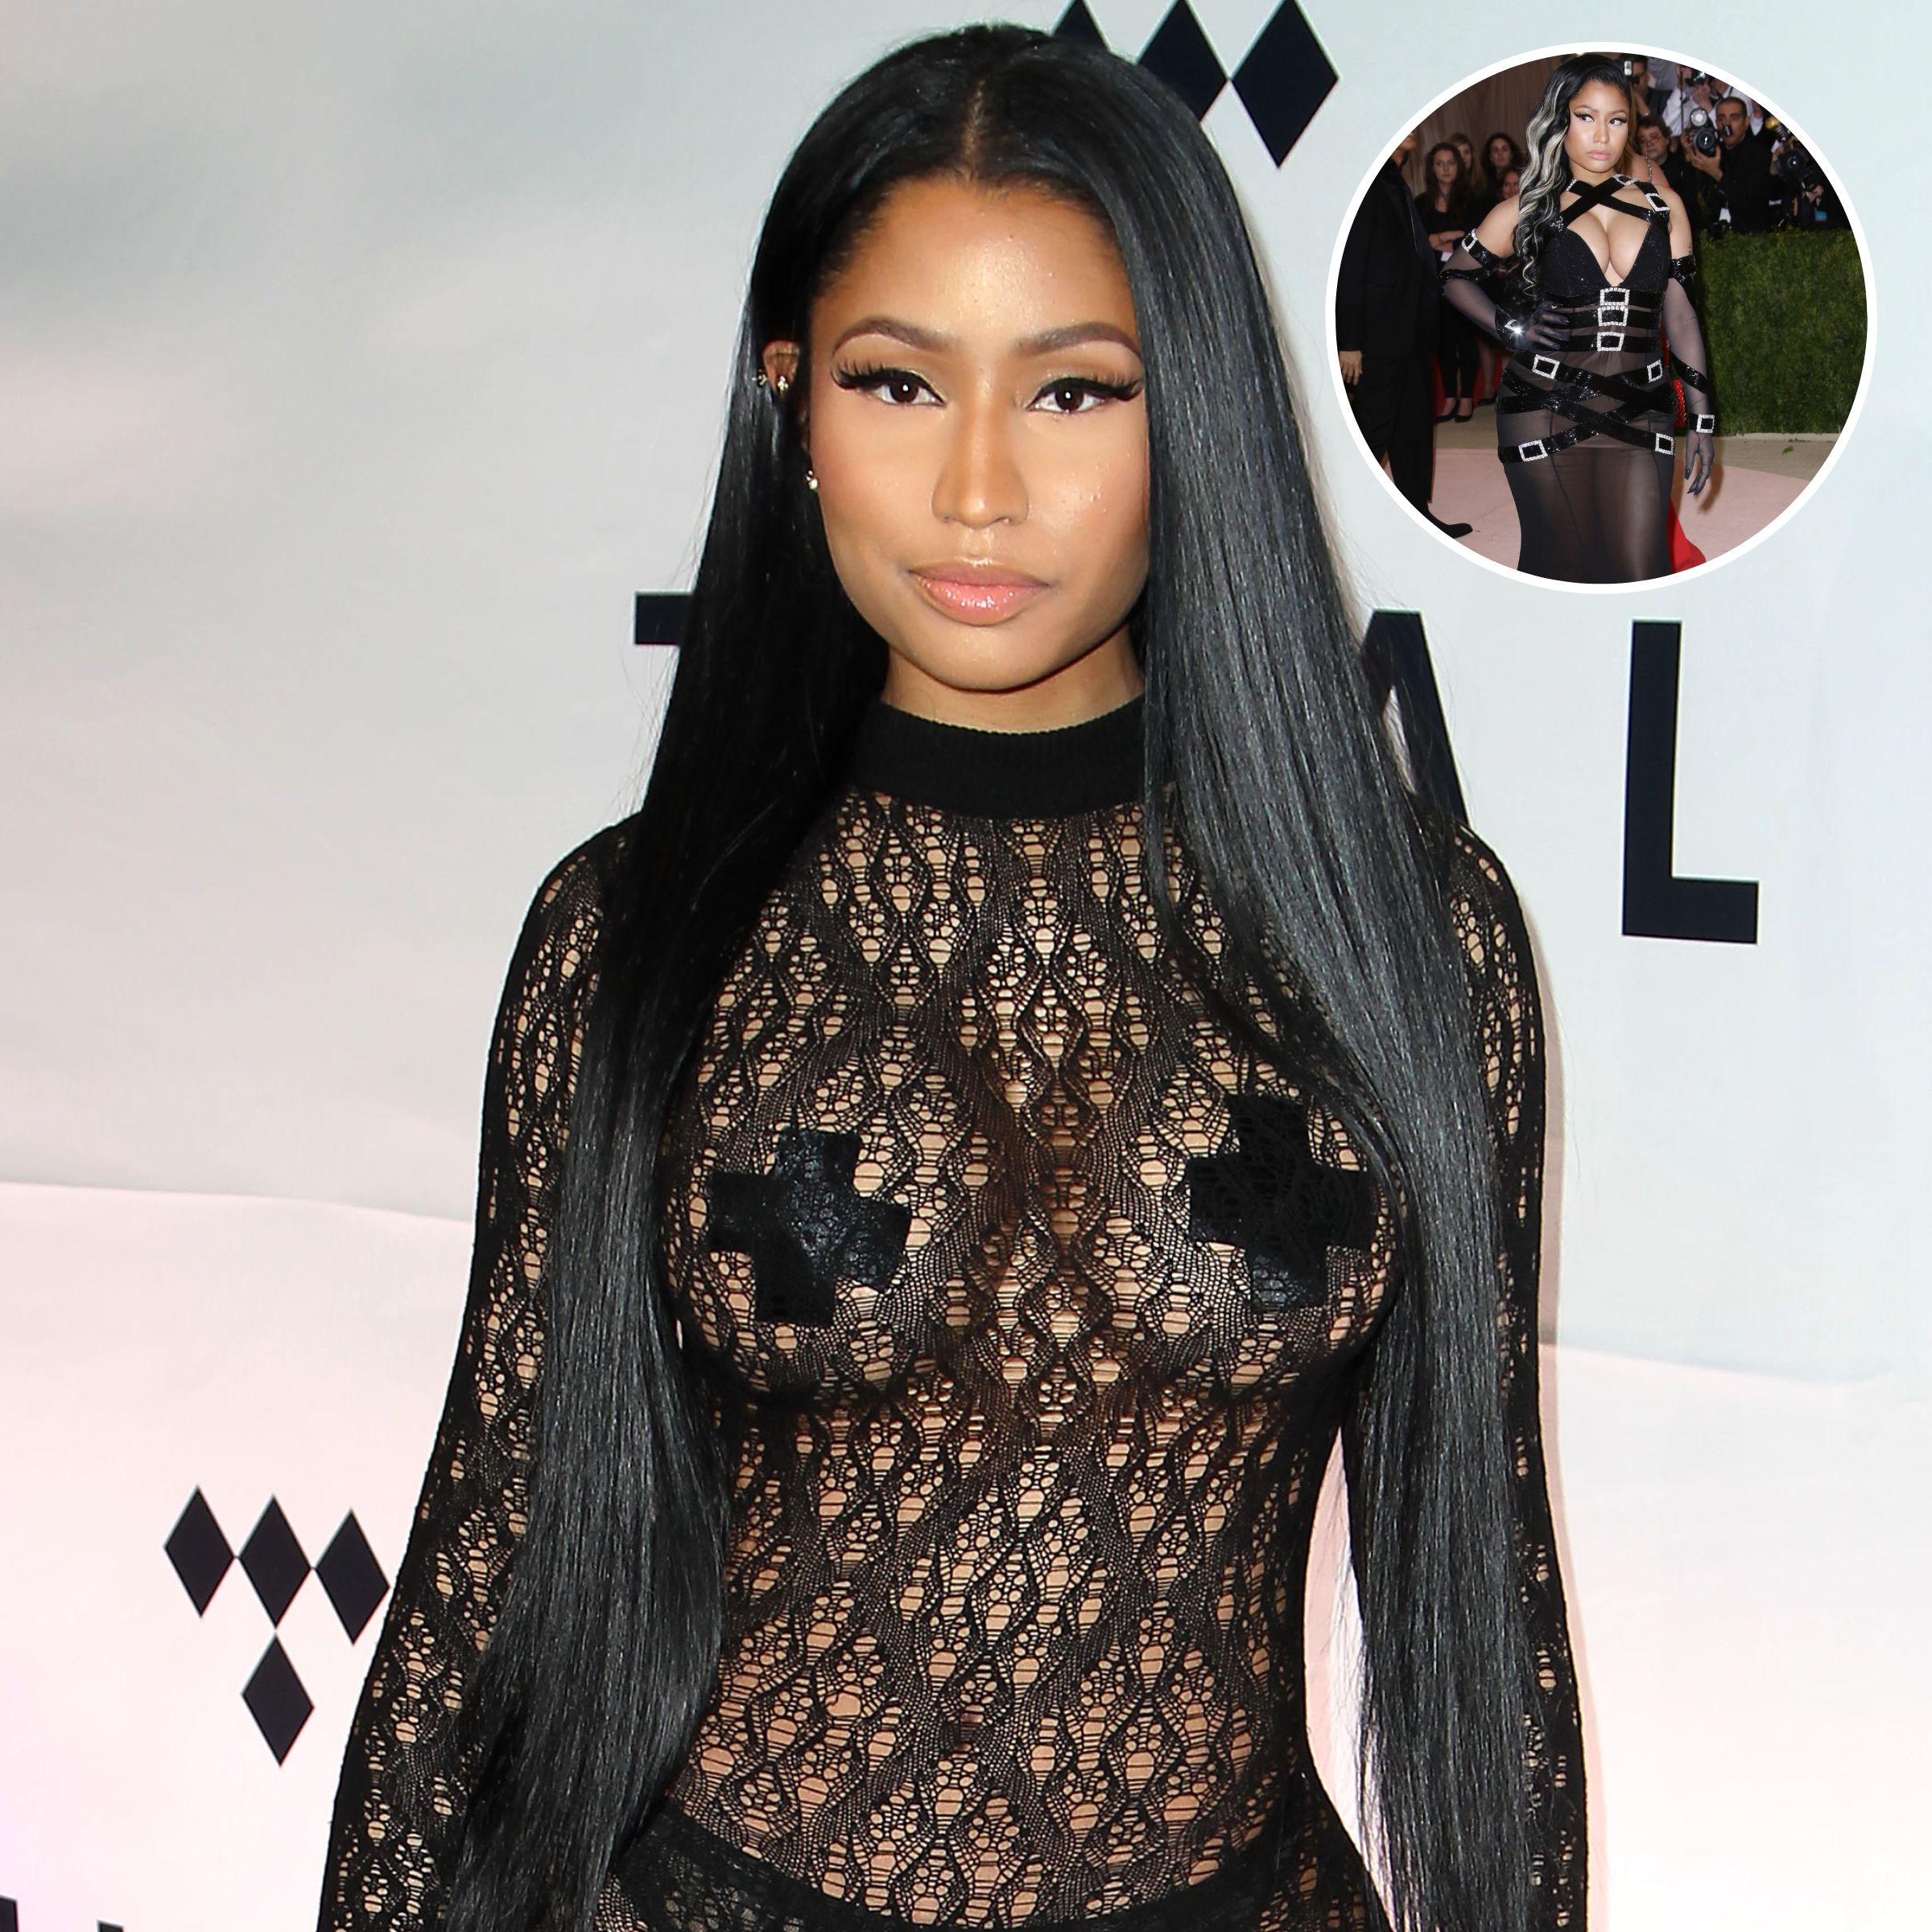 Nicki Minaj: Black Corset, Lace-Up Skirt